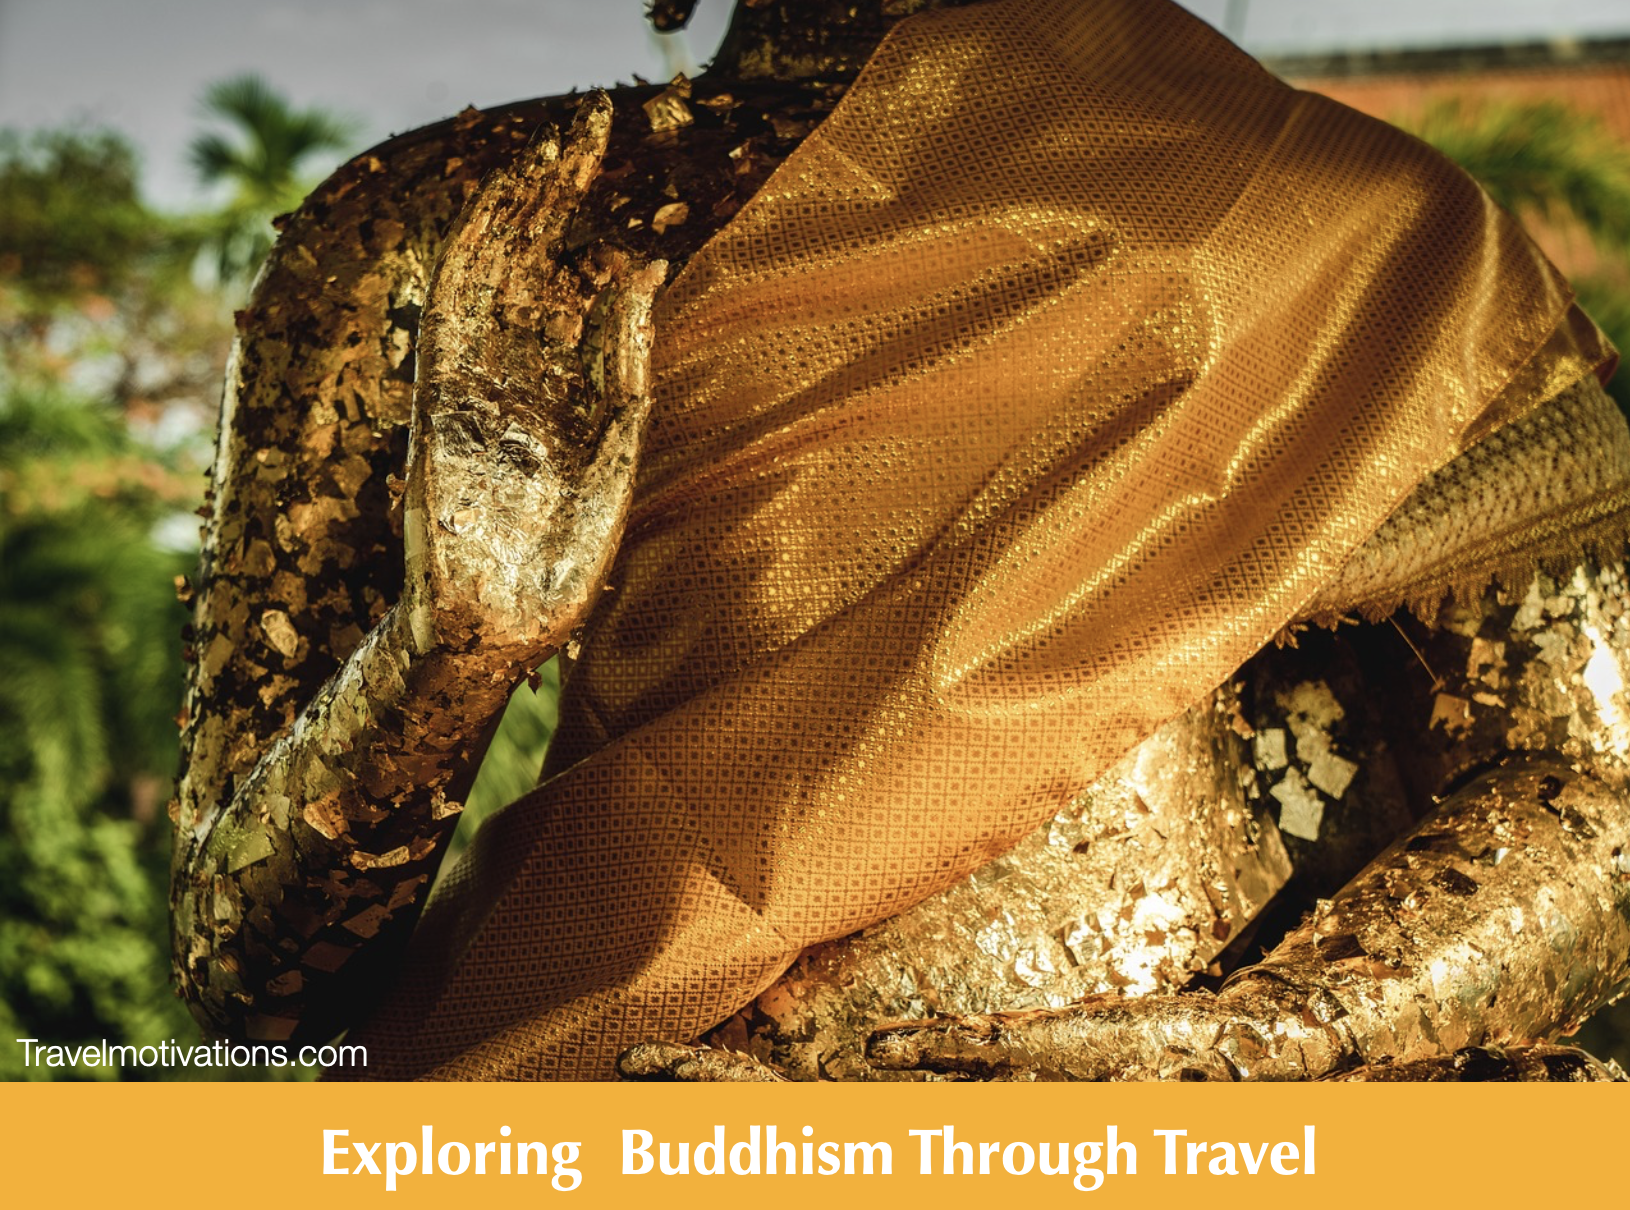 Explore Buddhism Through your Travel